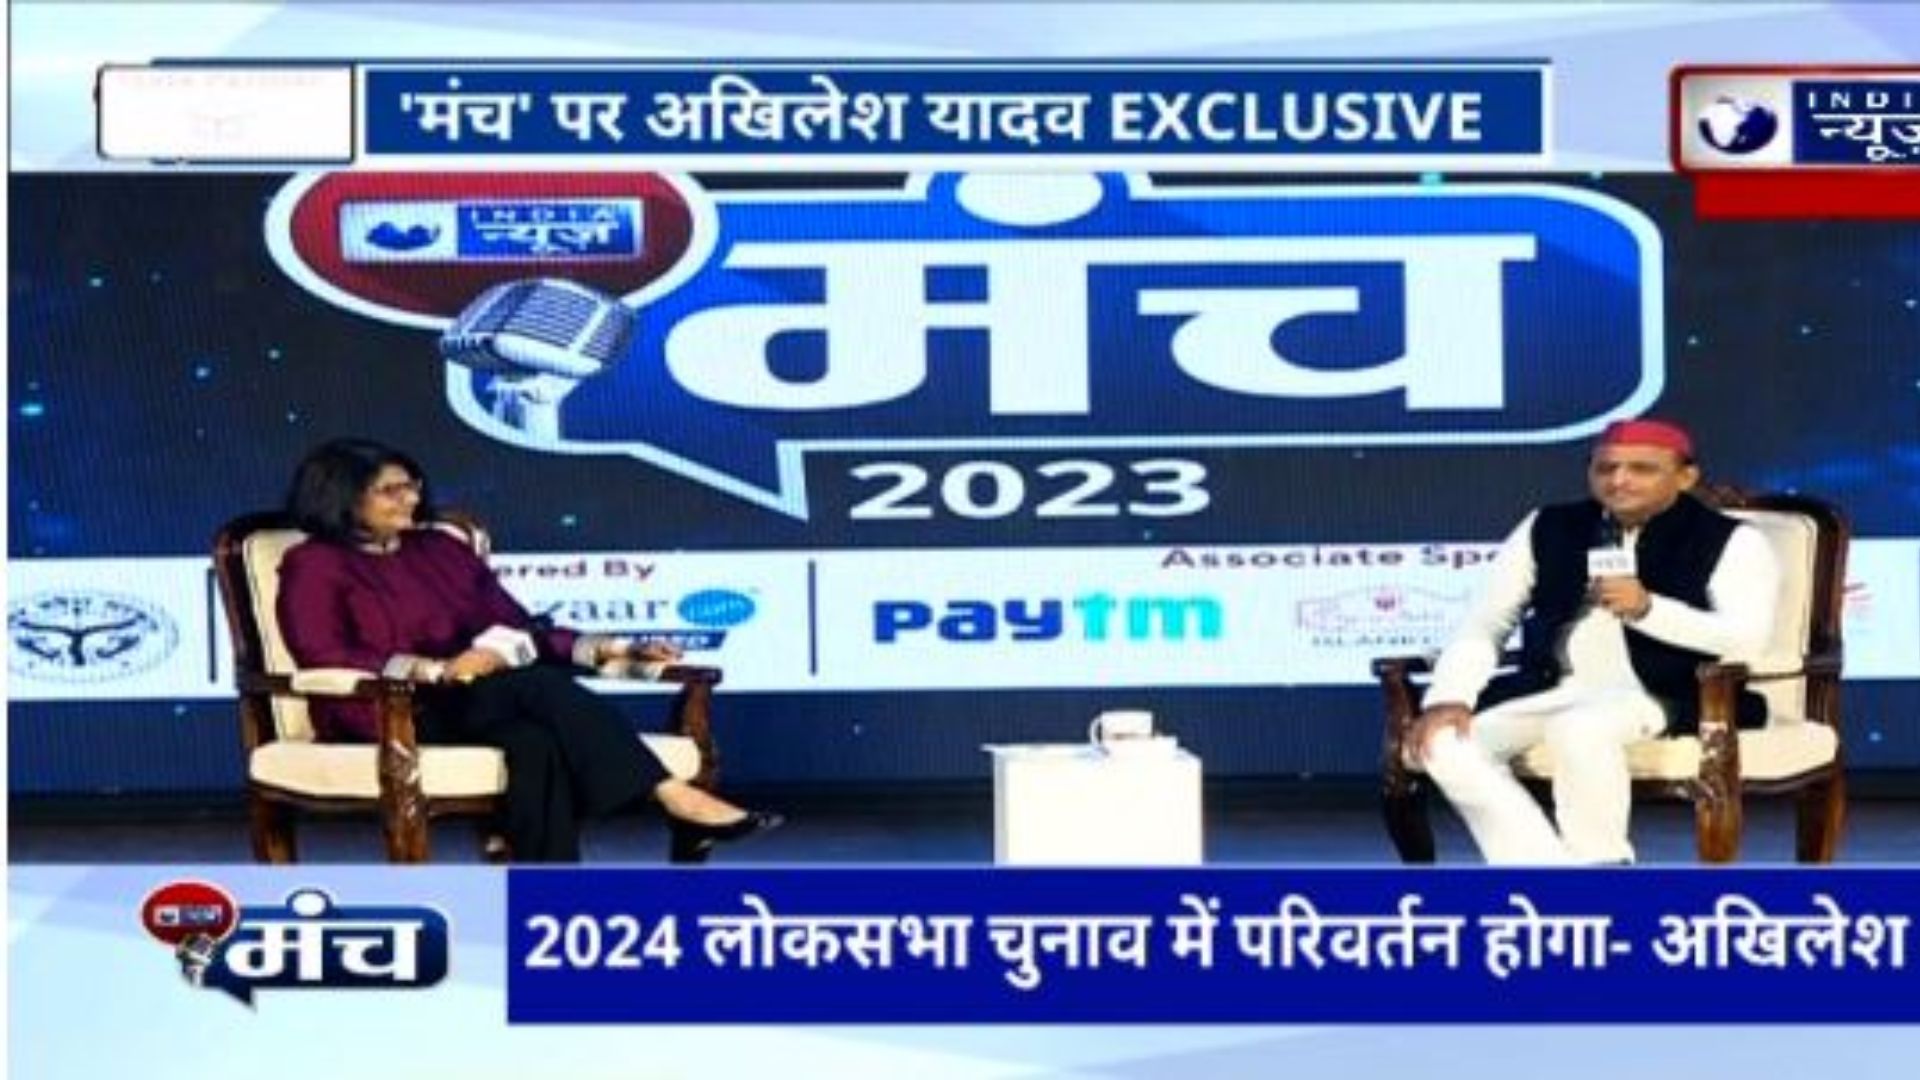 India News Manch 2023: Akhilesh Yadav asserts, the public aspires for change